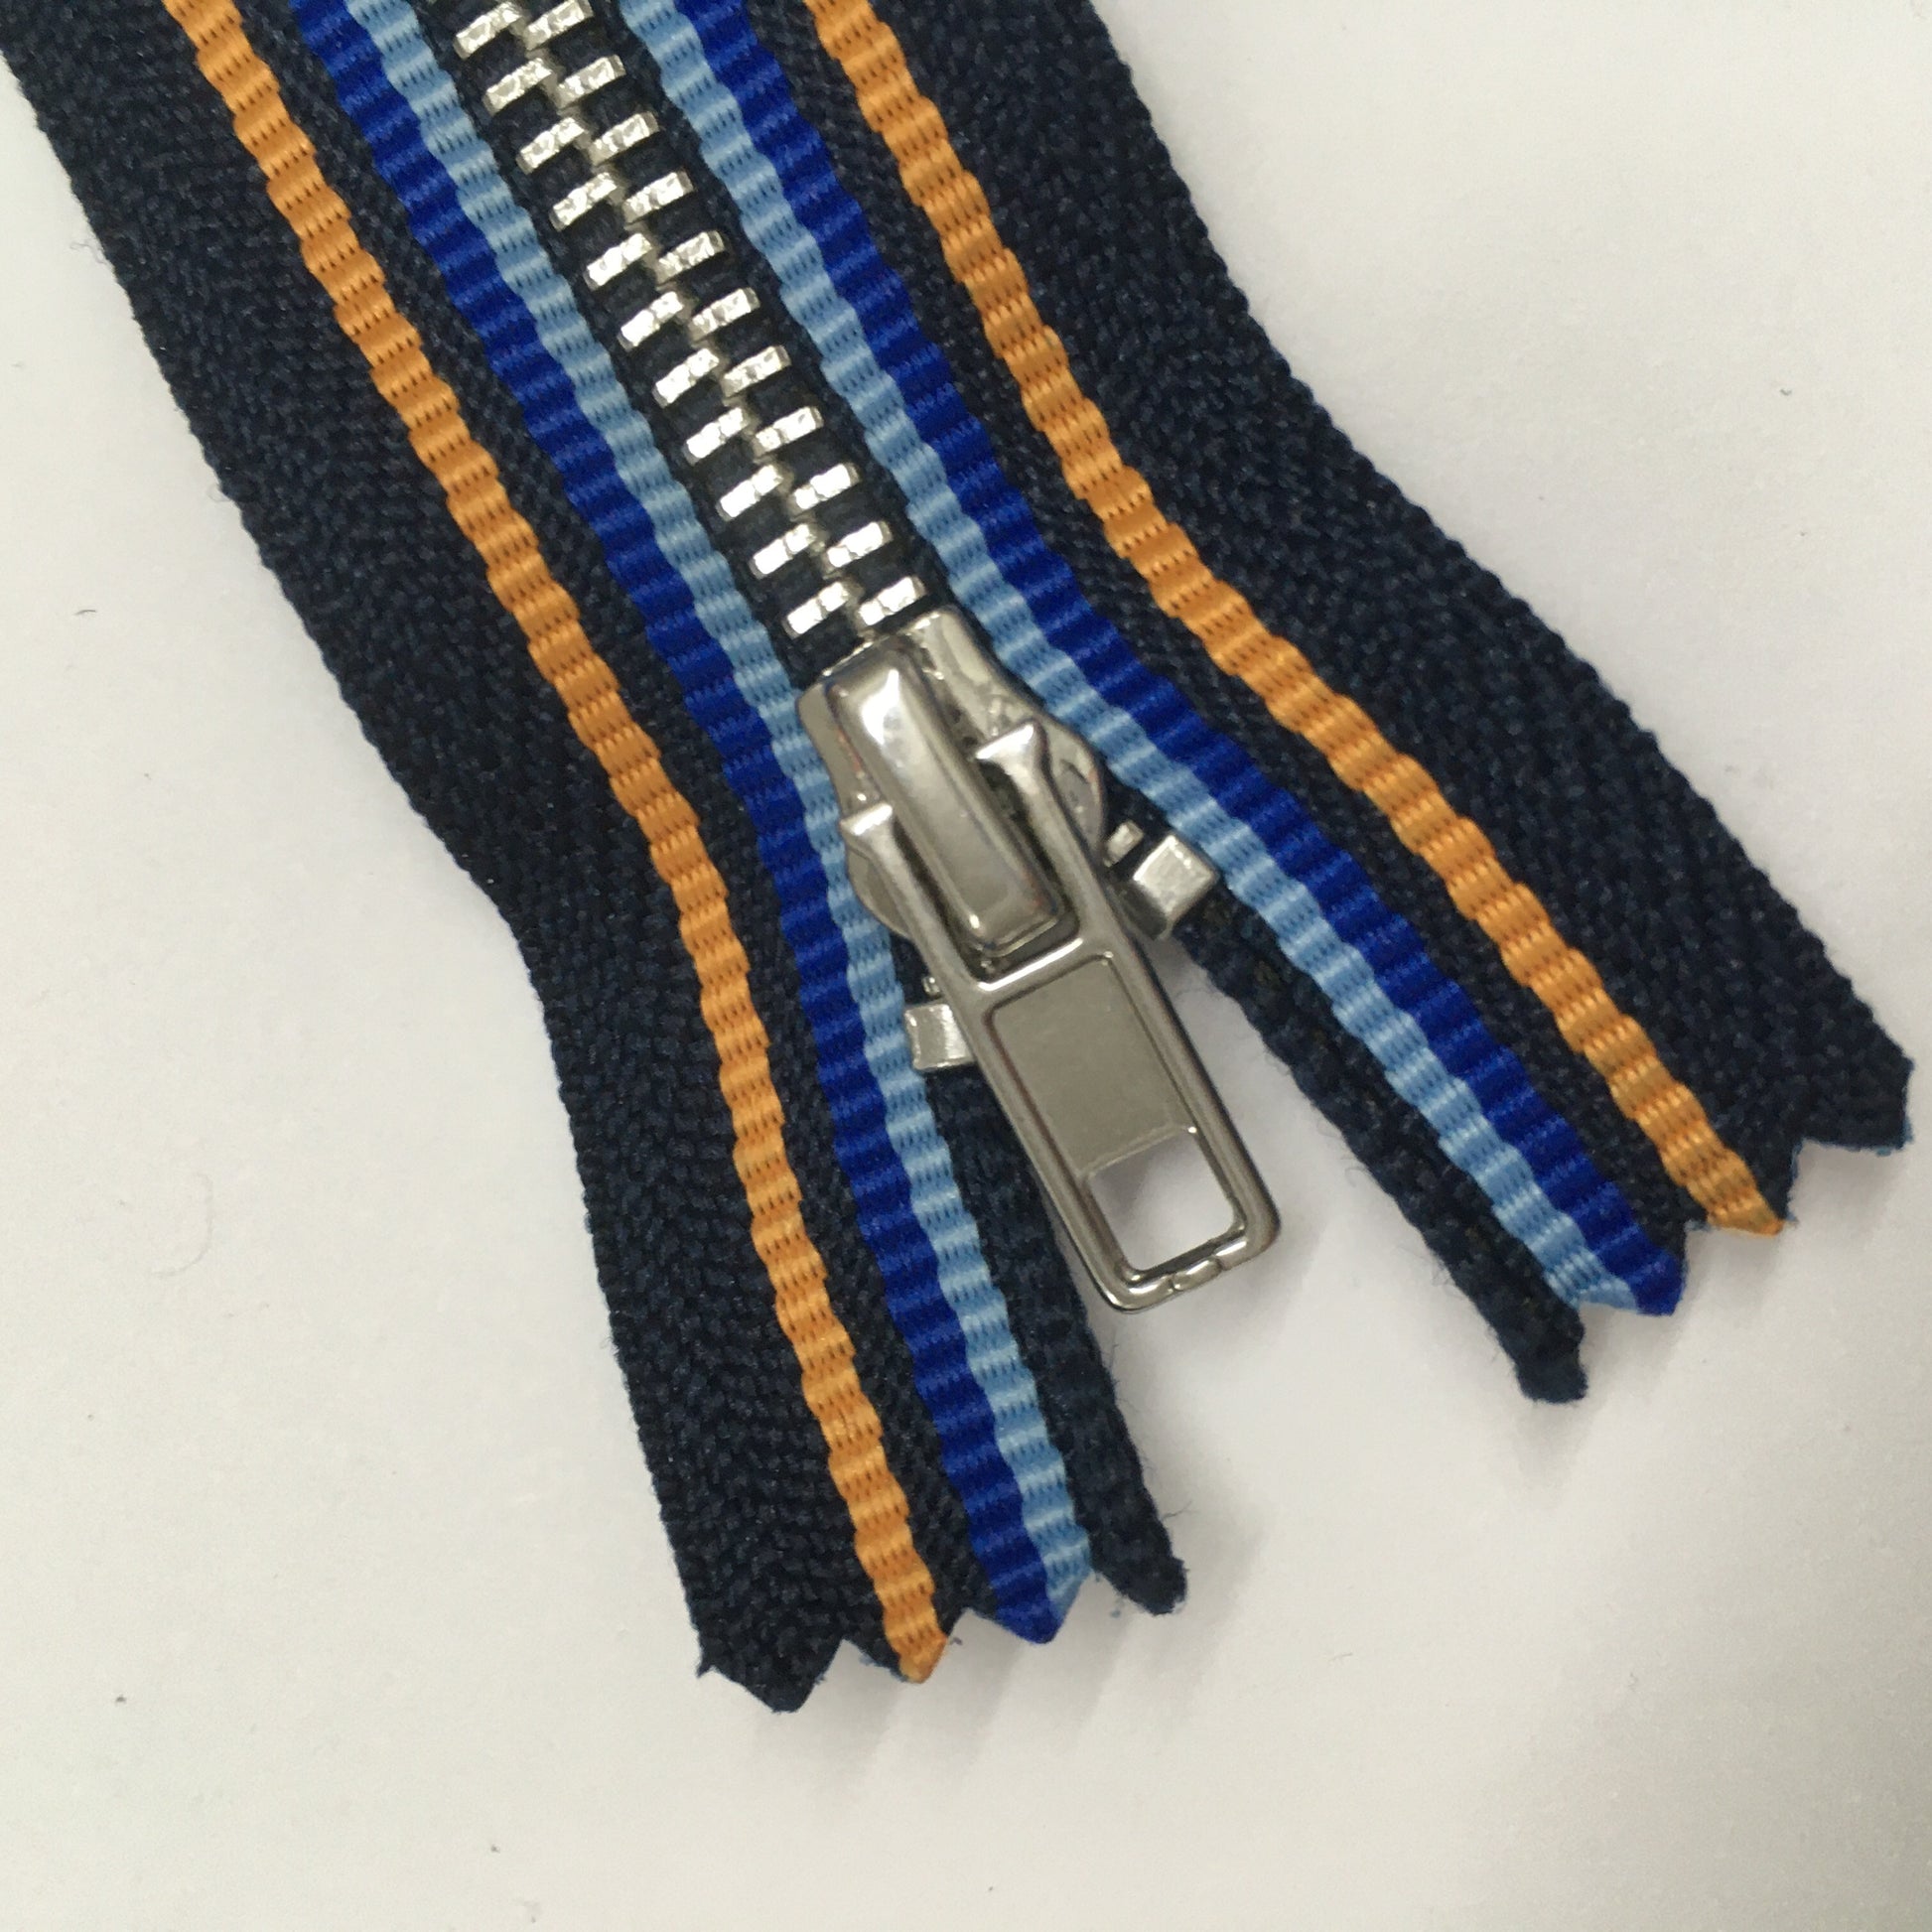 Metal Round Pull Non Separating Zipper